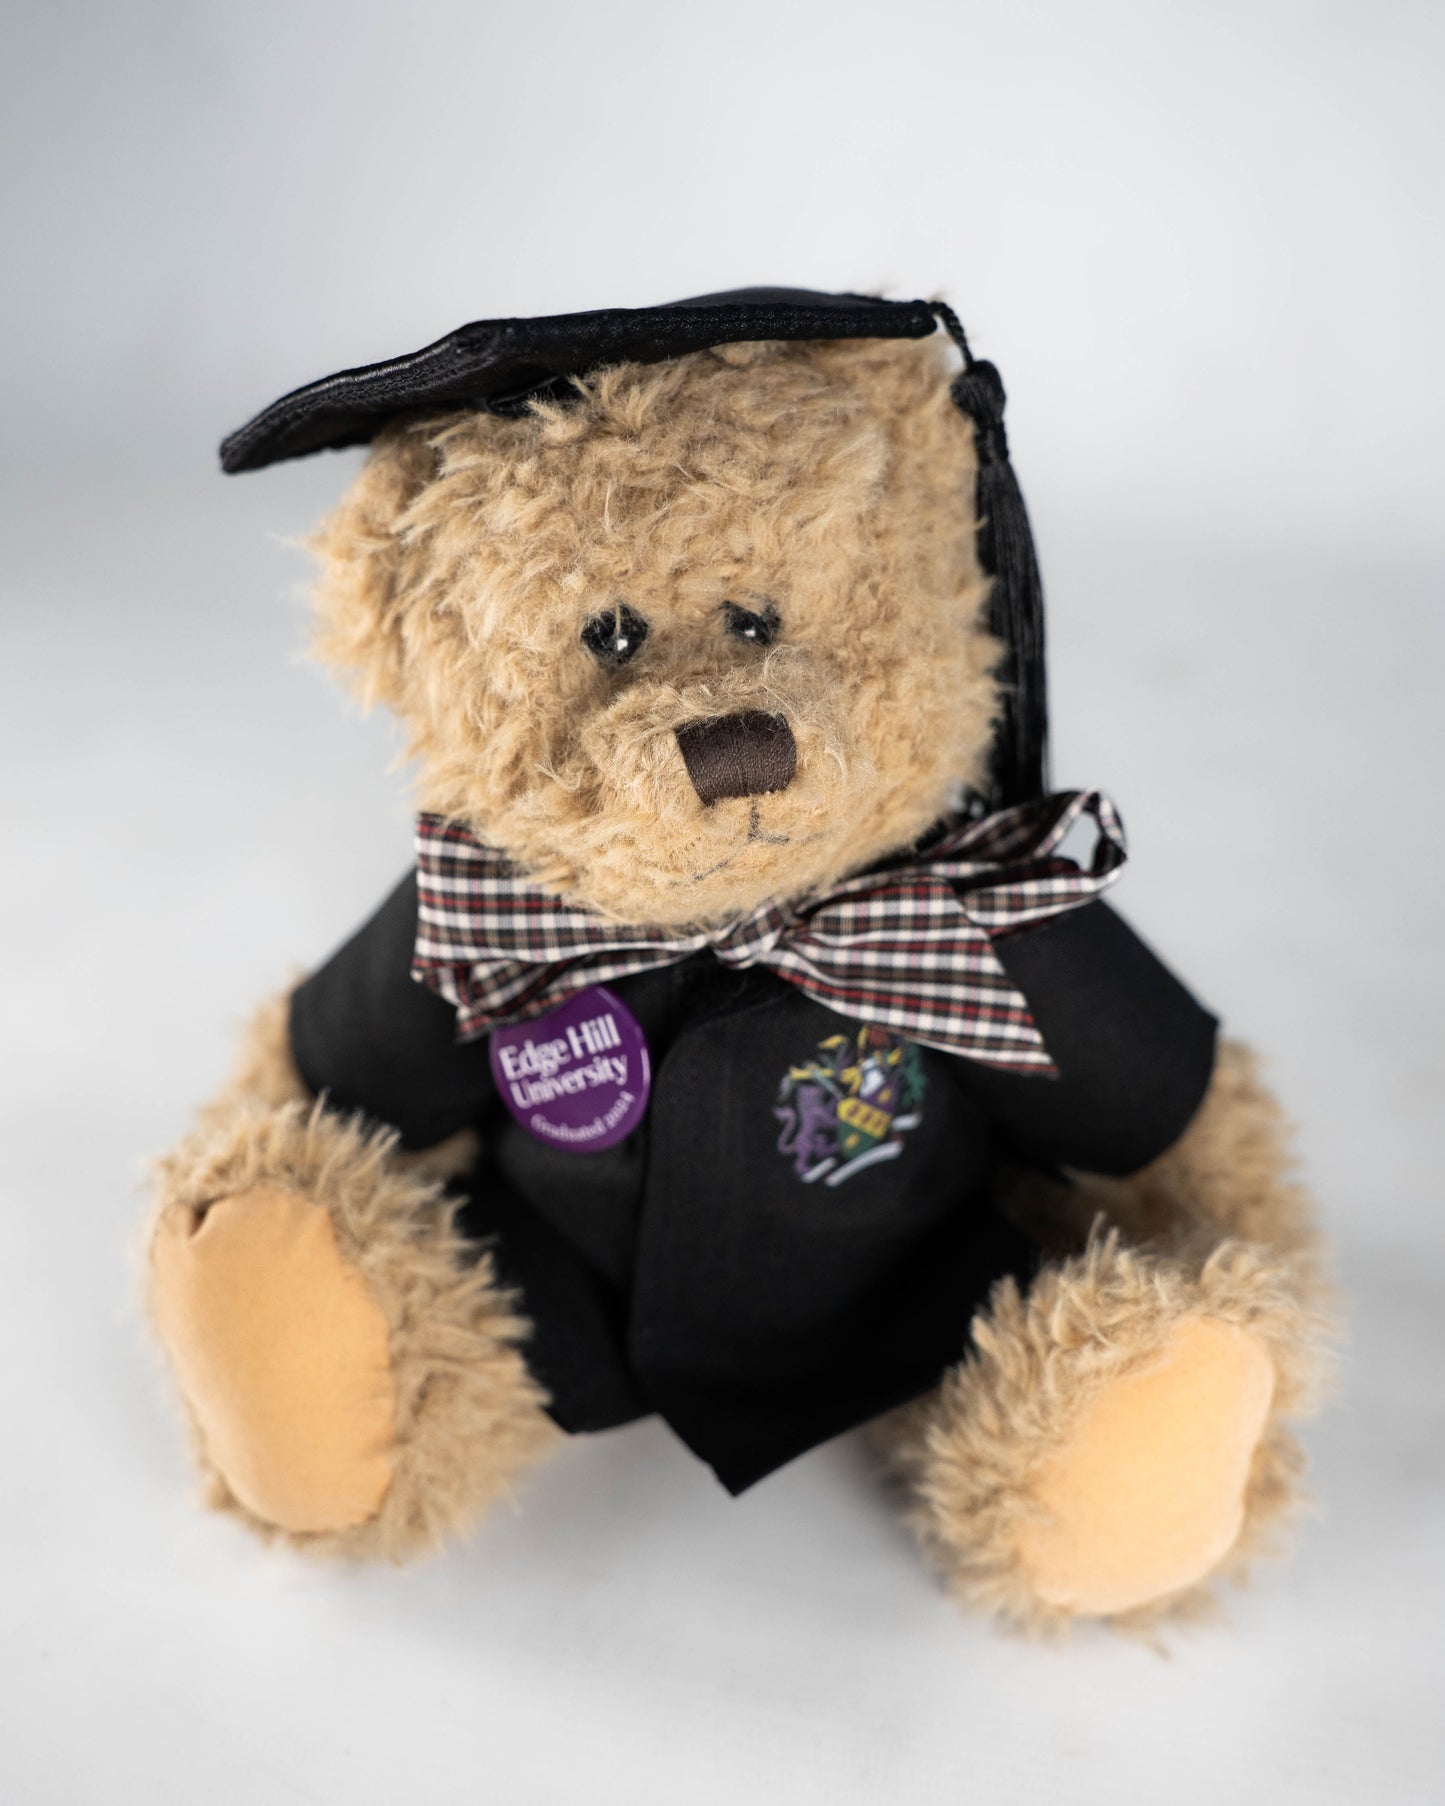 Graduation Teddy